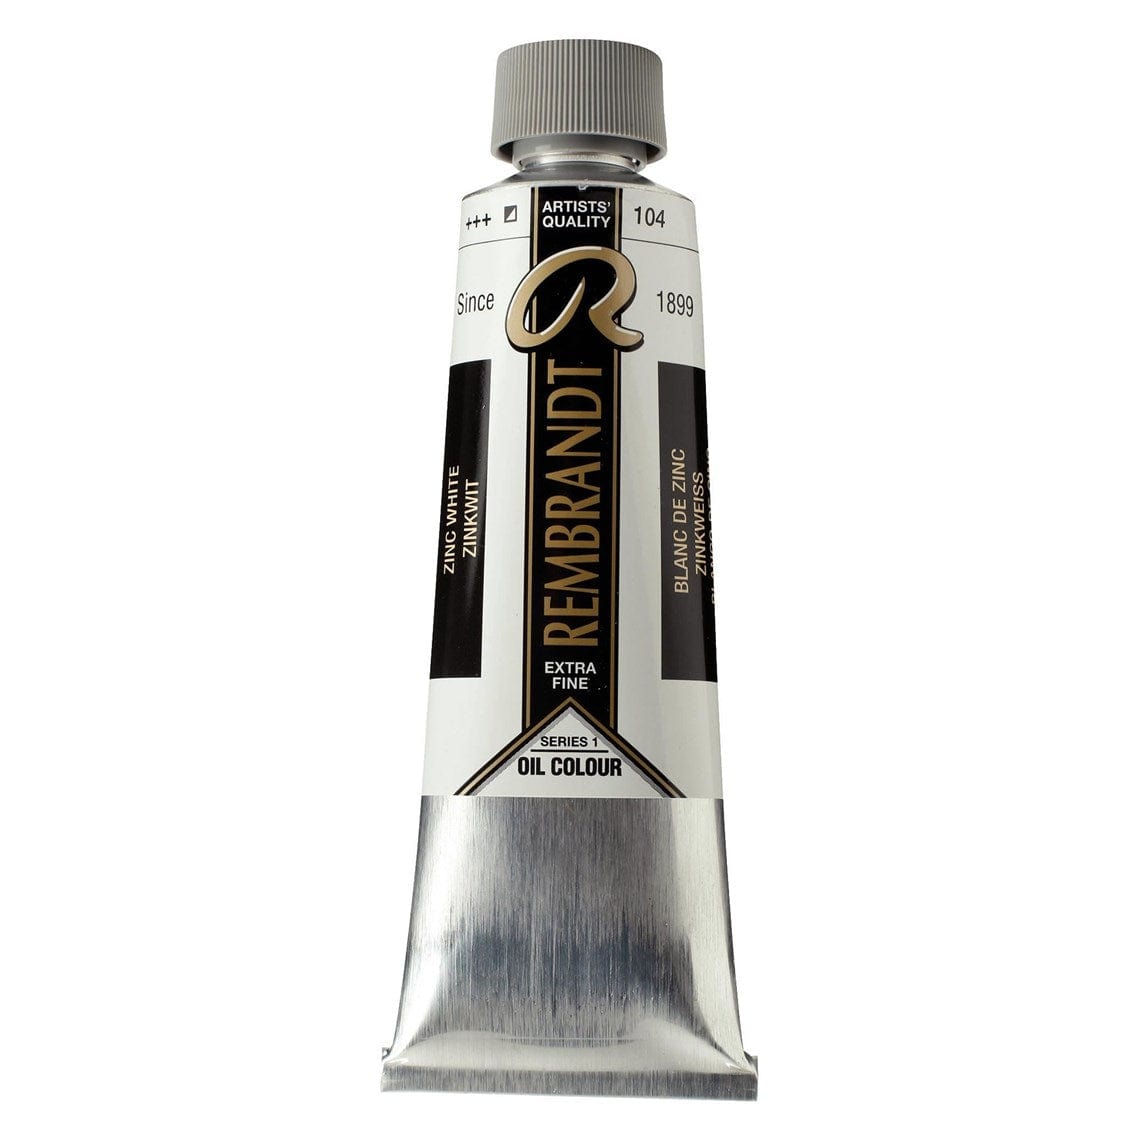 Rembrandt Oliemaling 150ml Zinc White (Safflower oil)